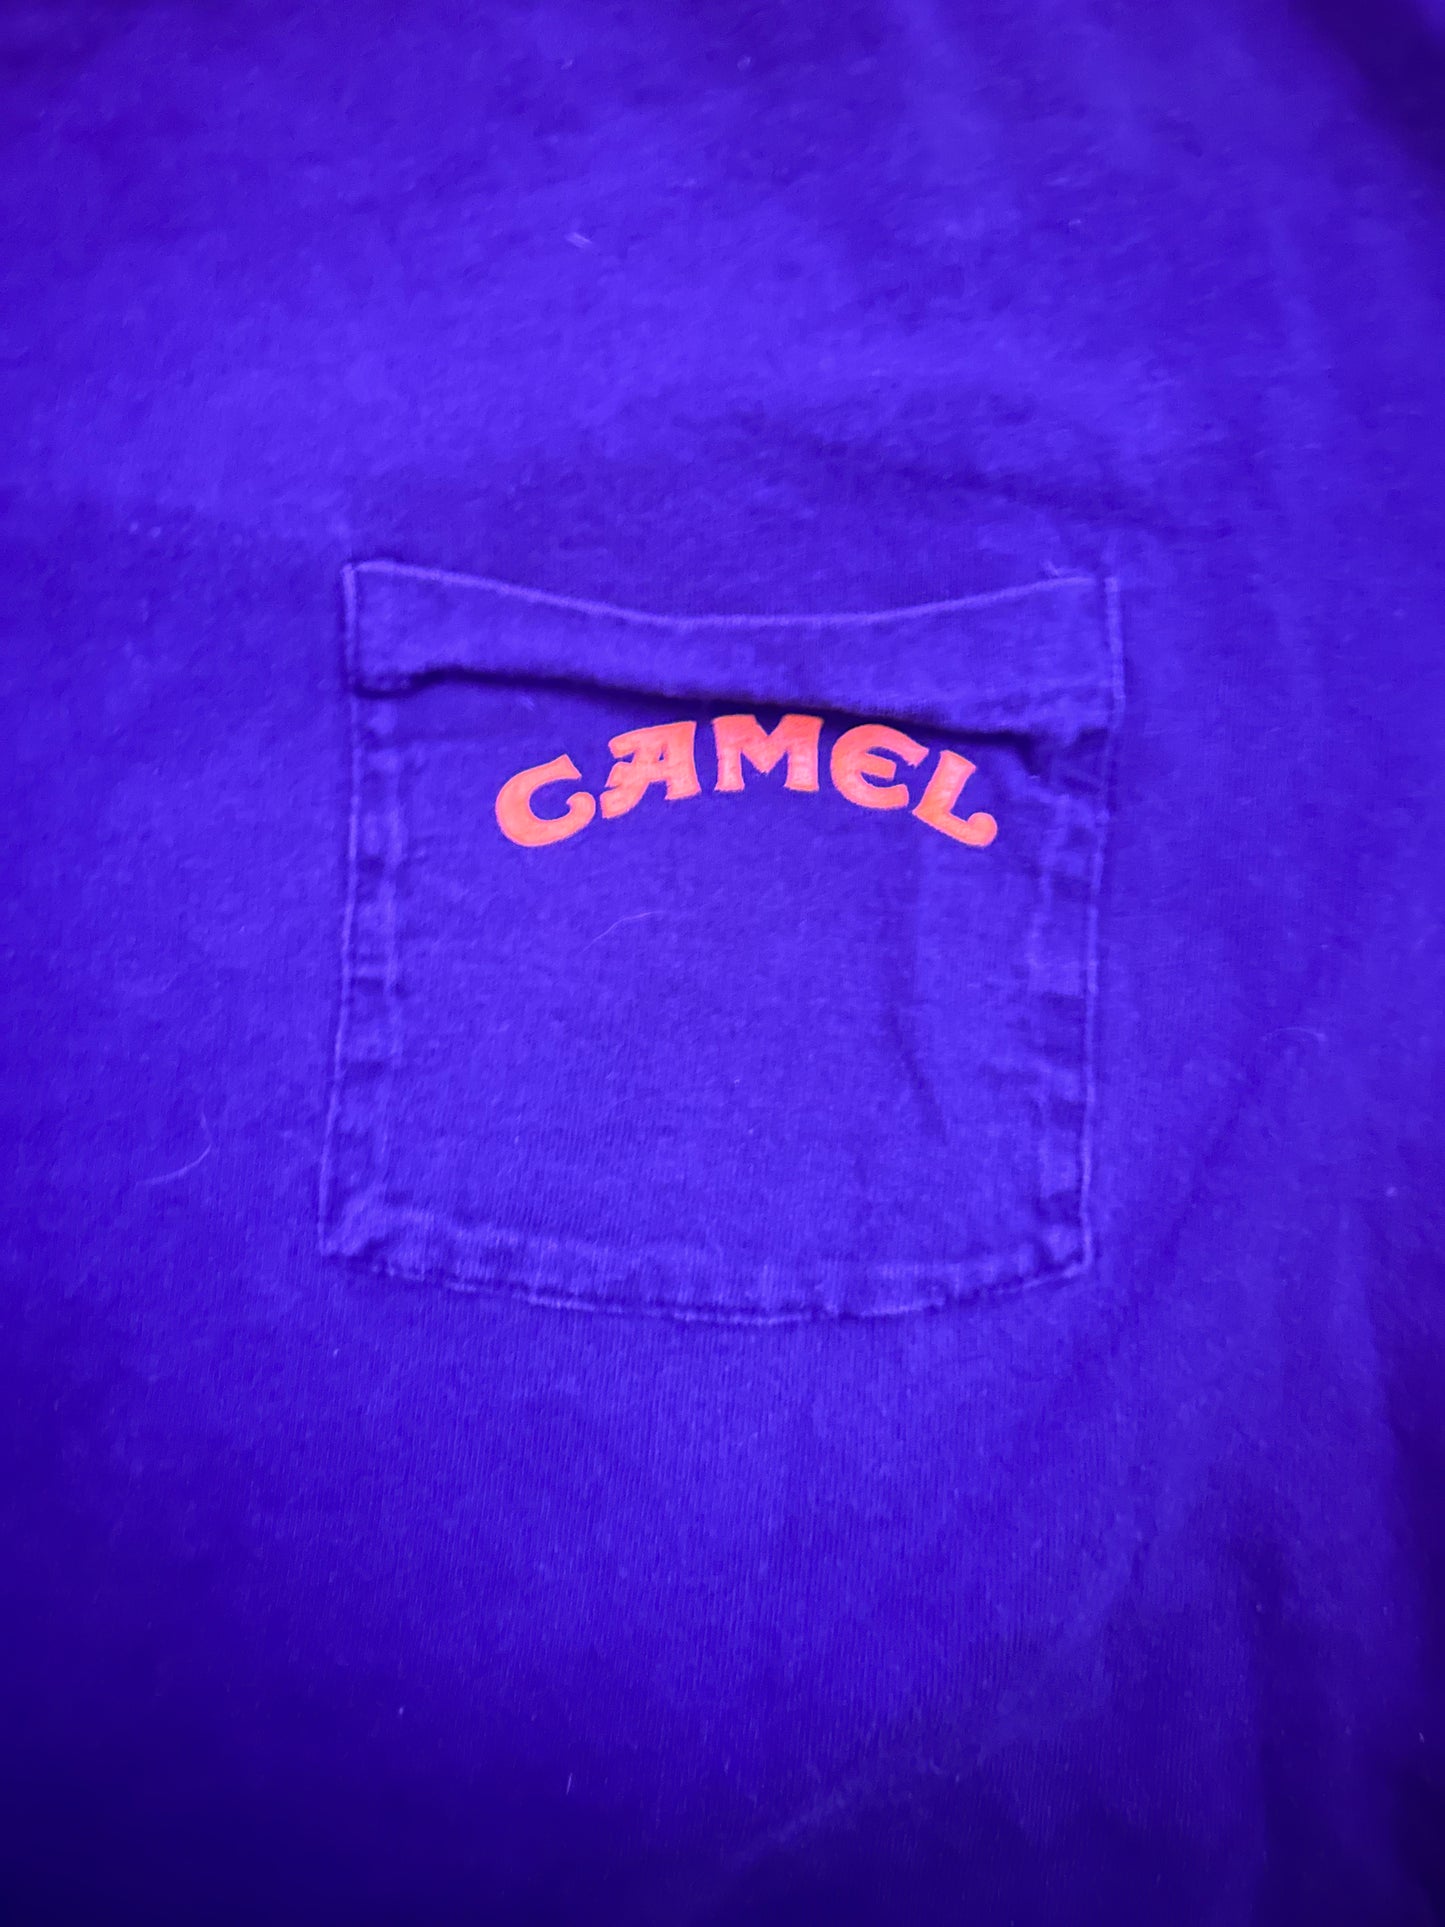 1992 Joe Camel Pocket Tee Size - XL no